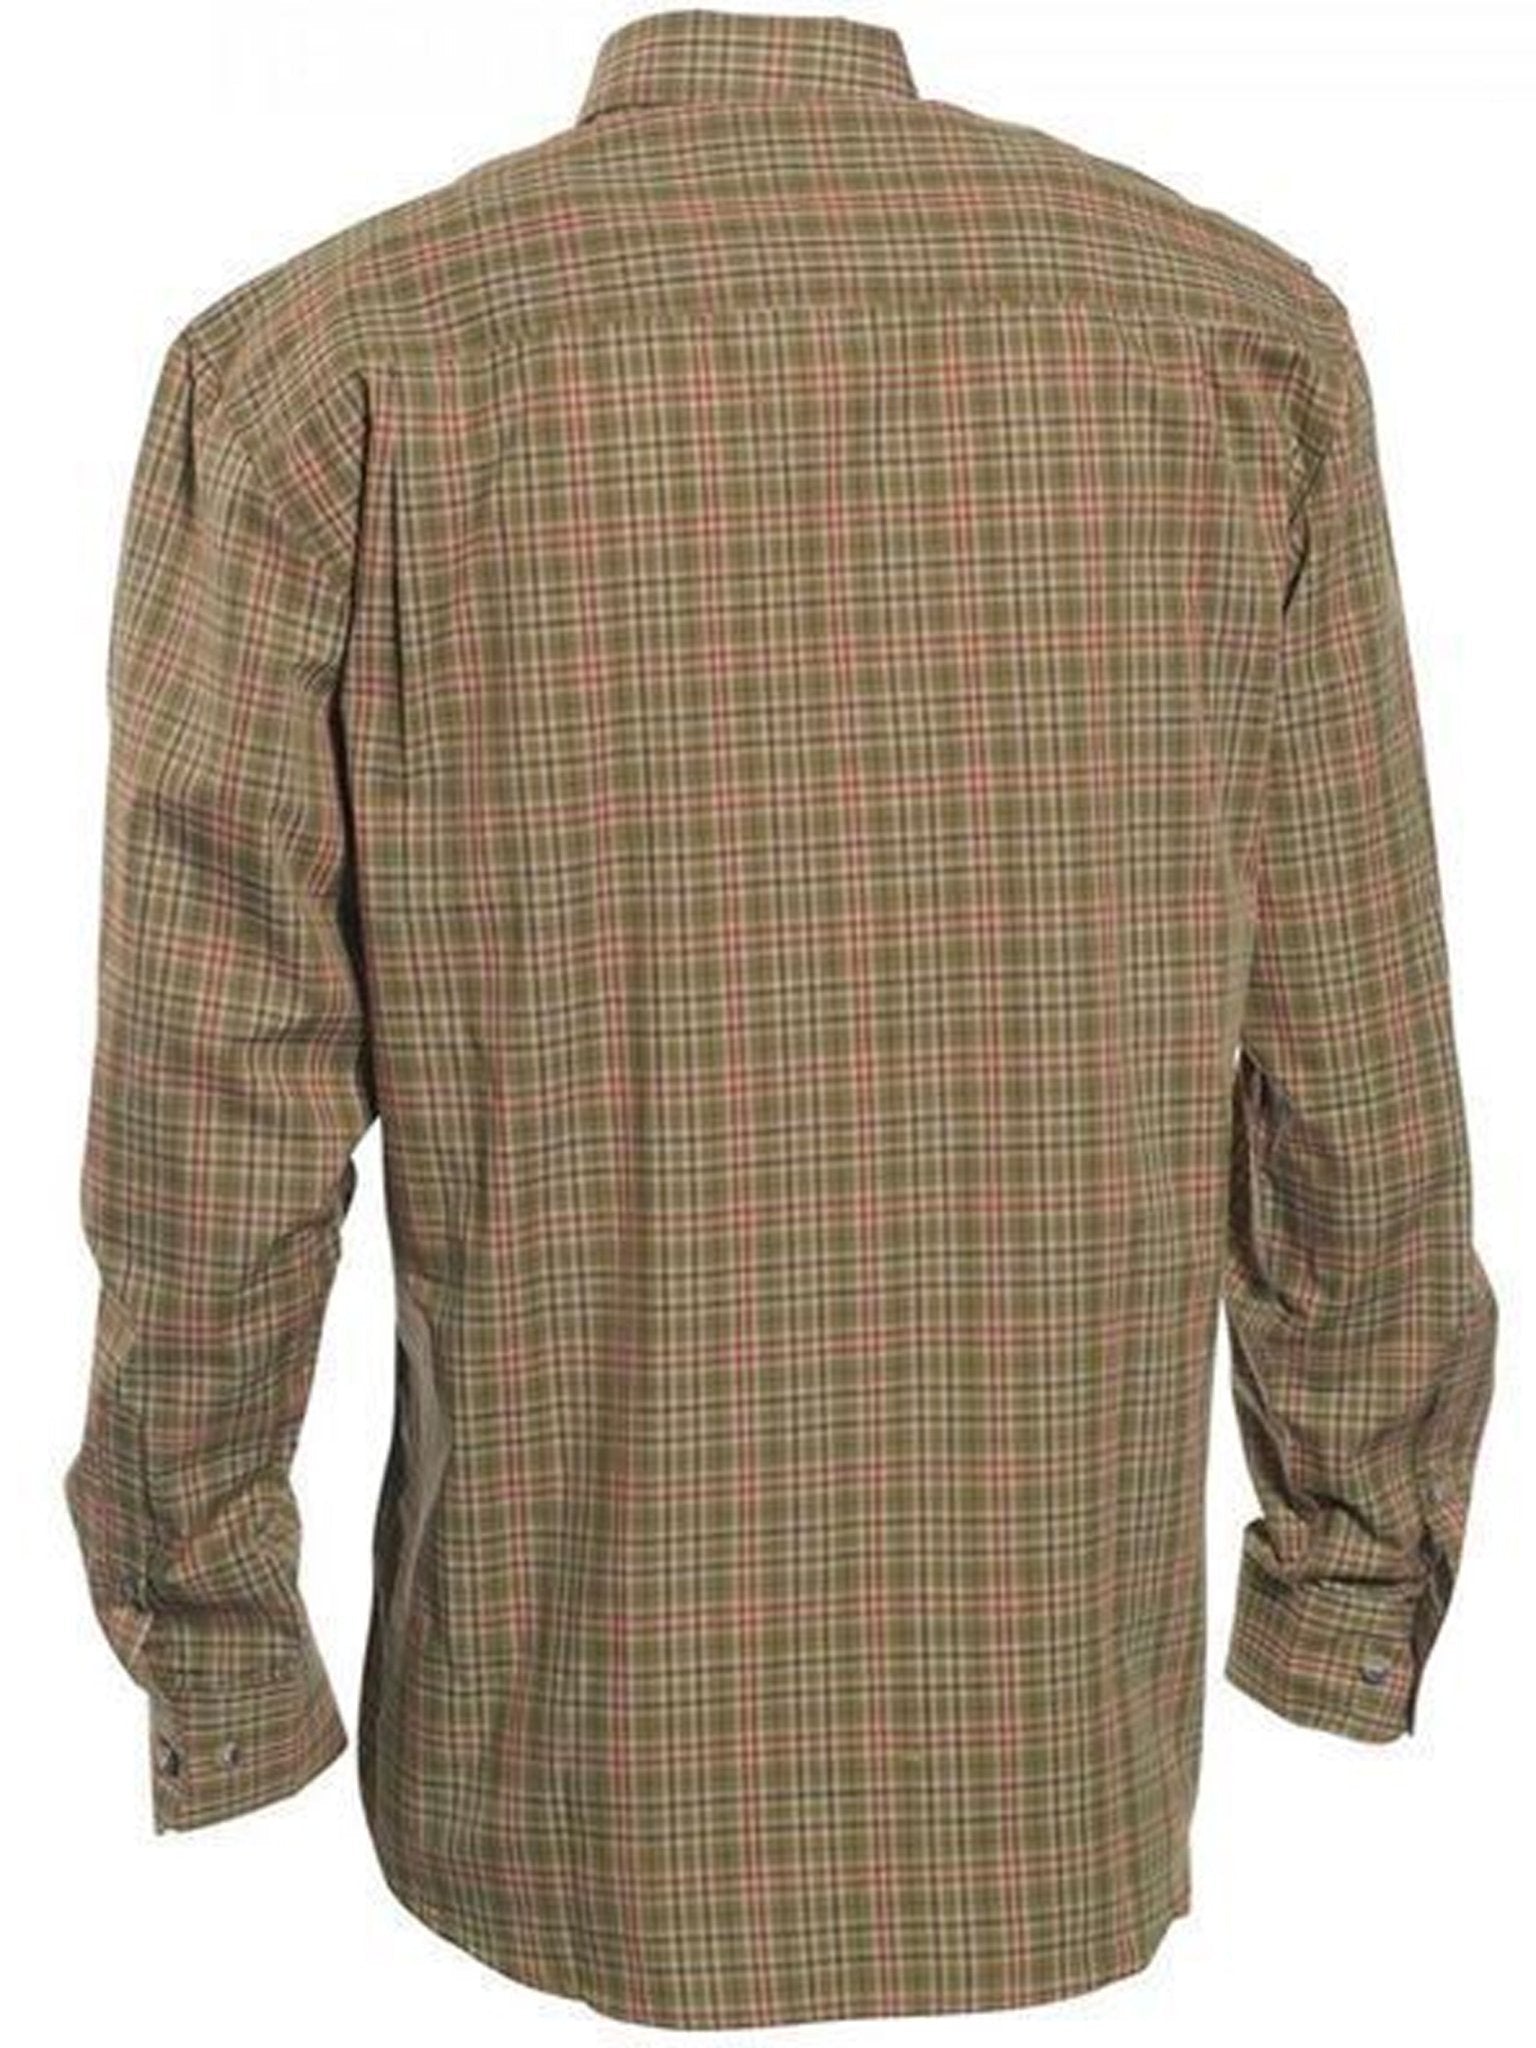 4elementsclothingDeerhunterDeerhunter - Marshall Mens Long Sleeve shirt / Mens Check Shirt / Country Mens ShirtShirt8467-499-3536